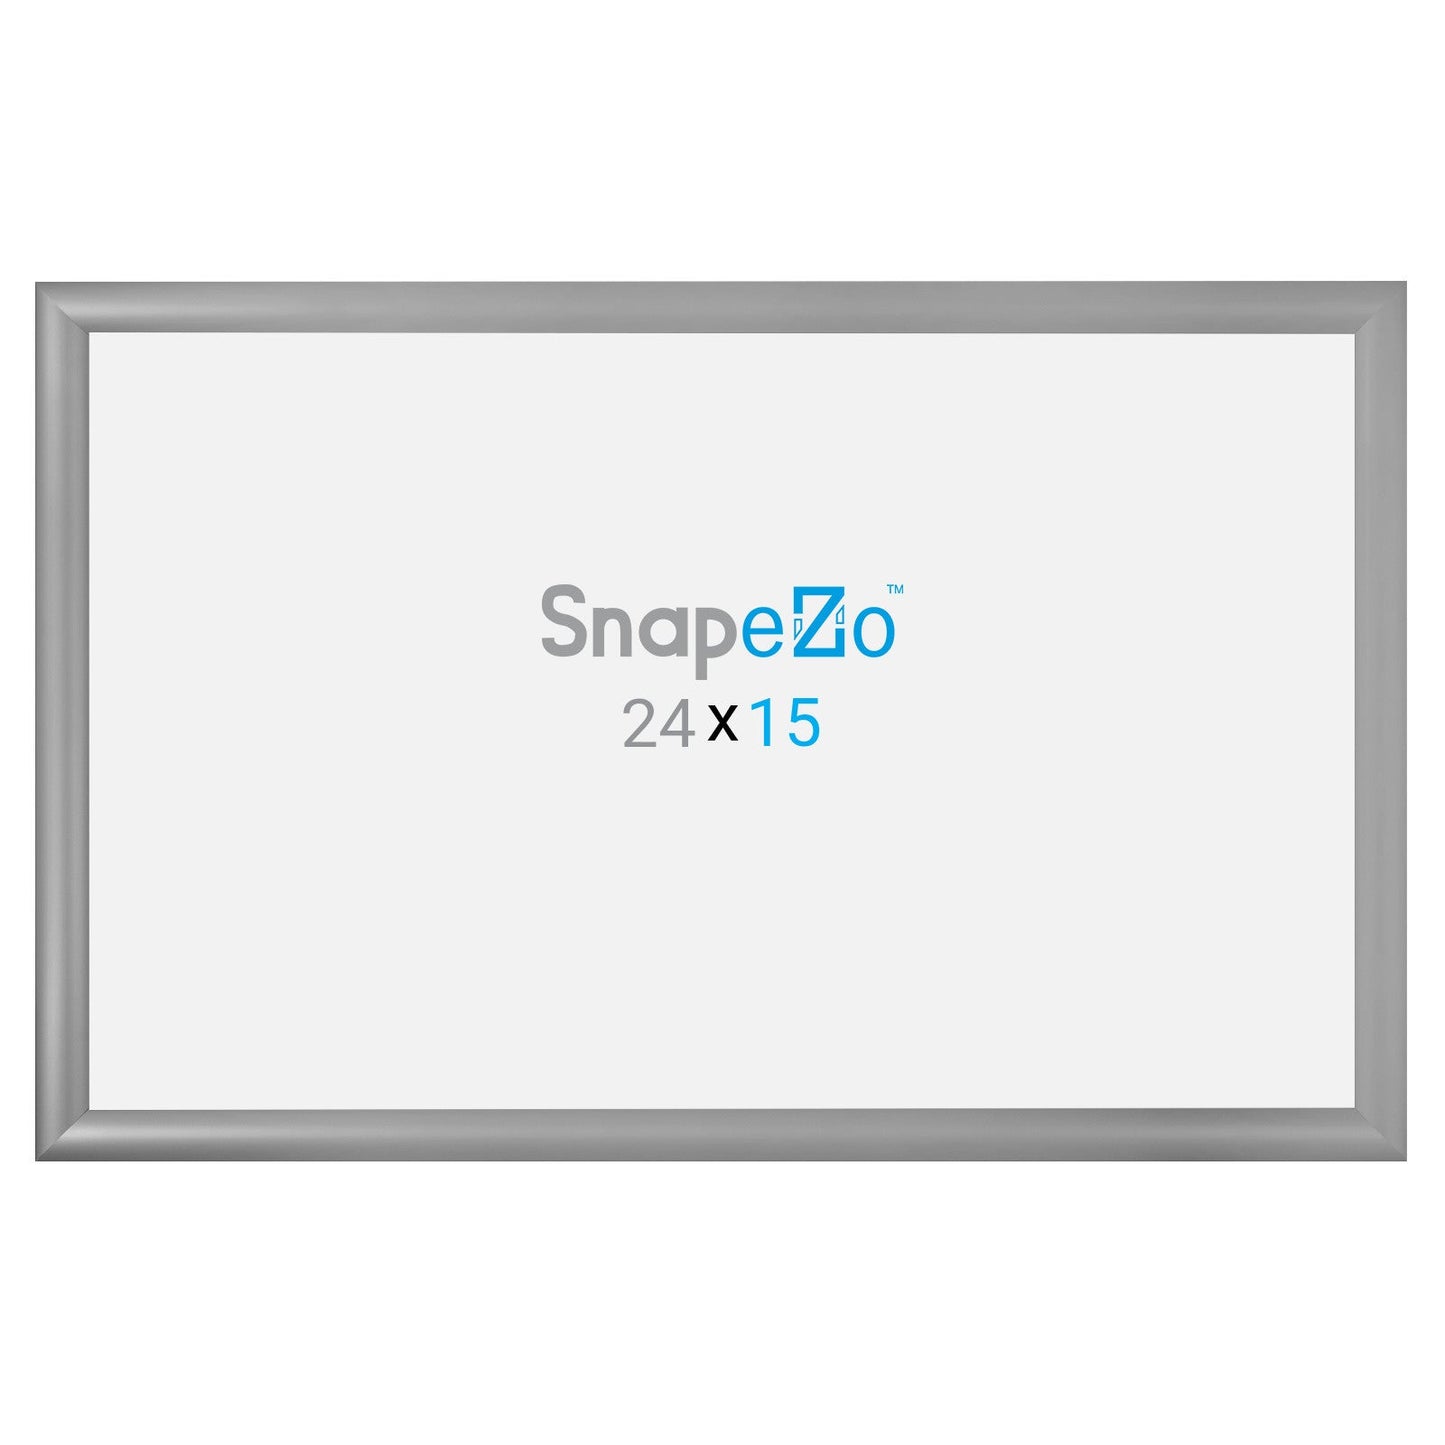 15x24 Silver SnapeZo® Snap Frame - 1.2" Profile